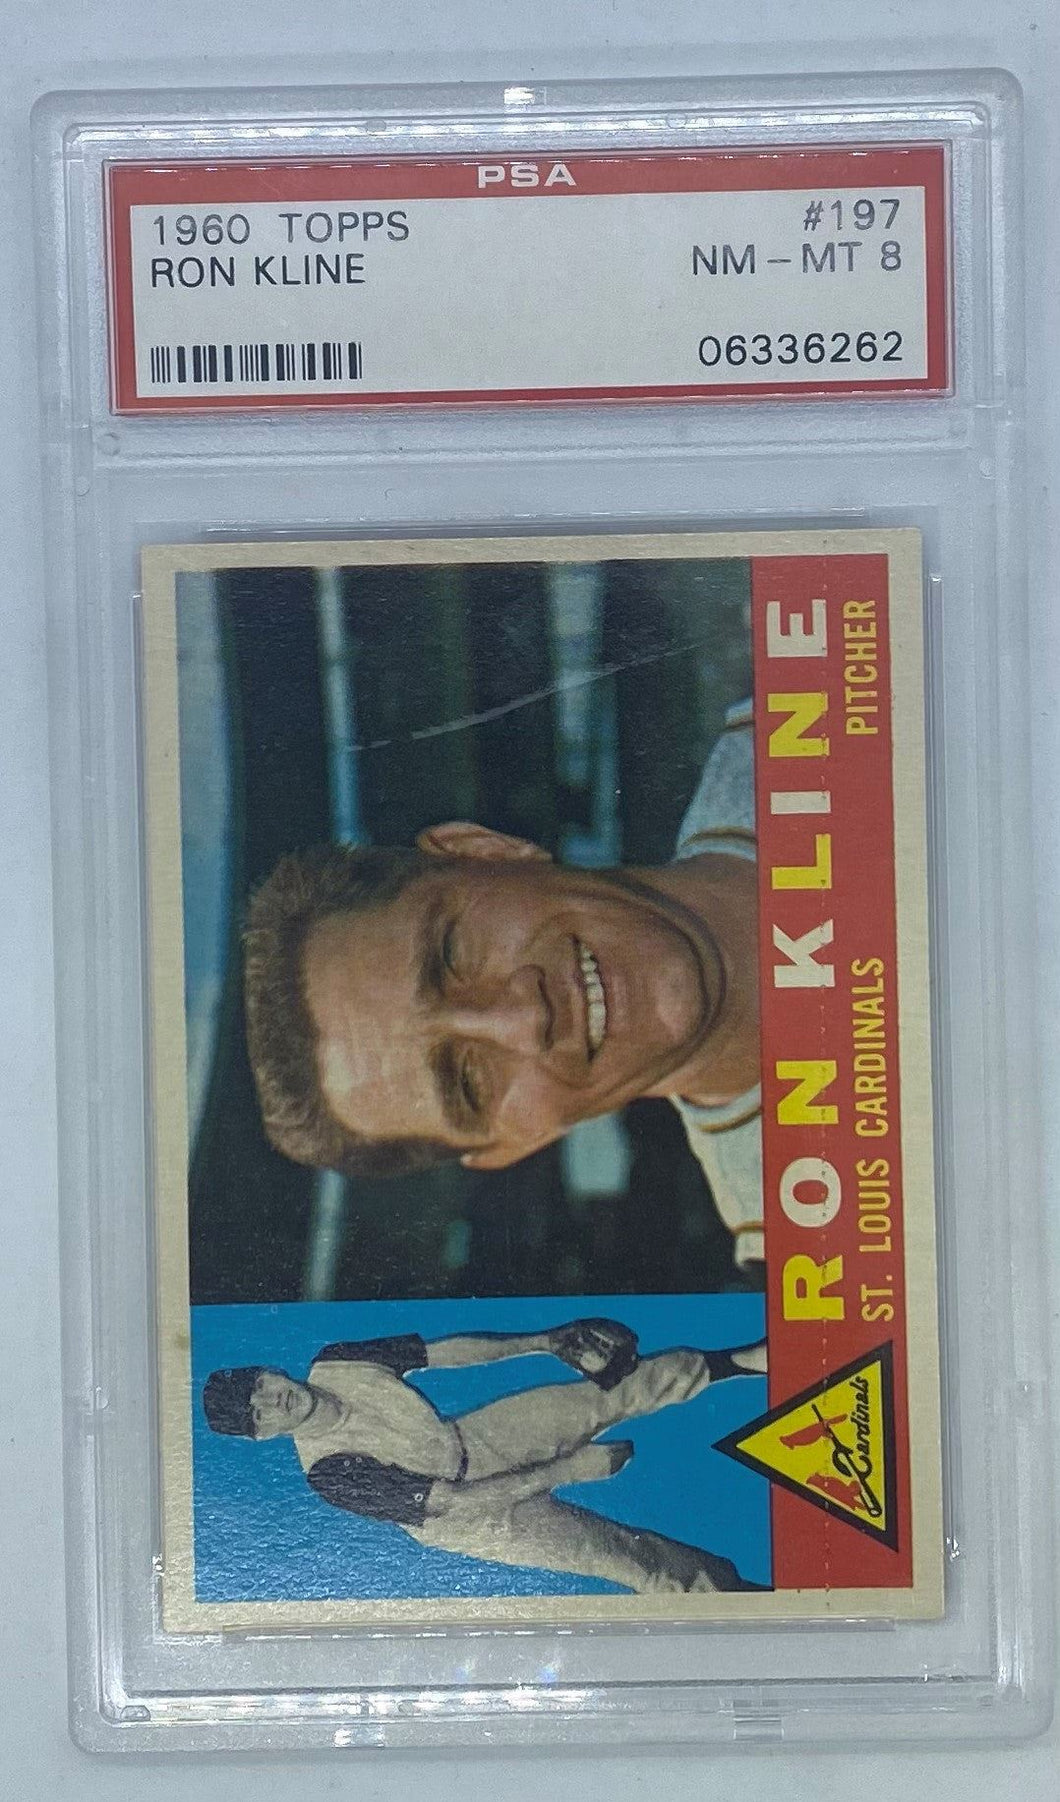 1960 Topps Ron Kline #197 PSA NM-MT 8, 06336262